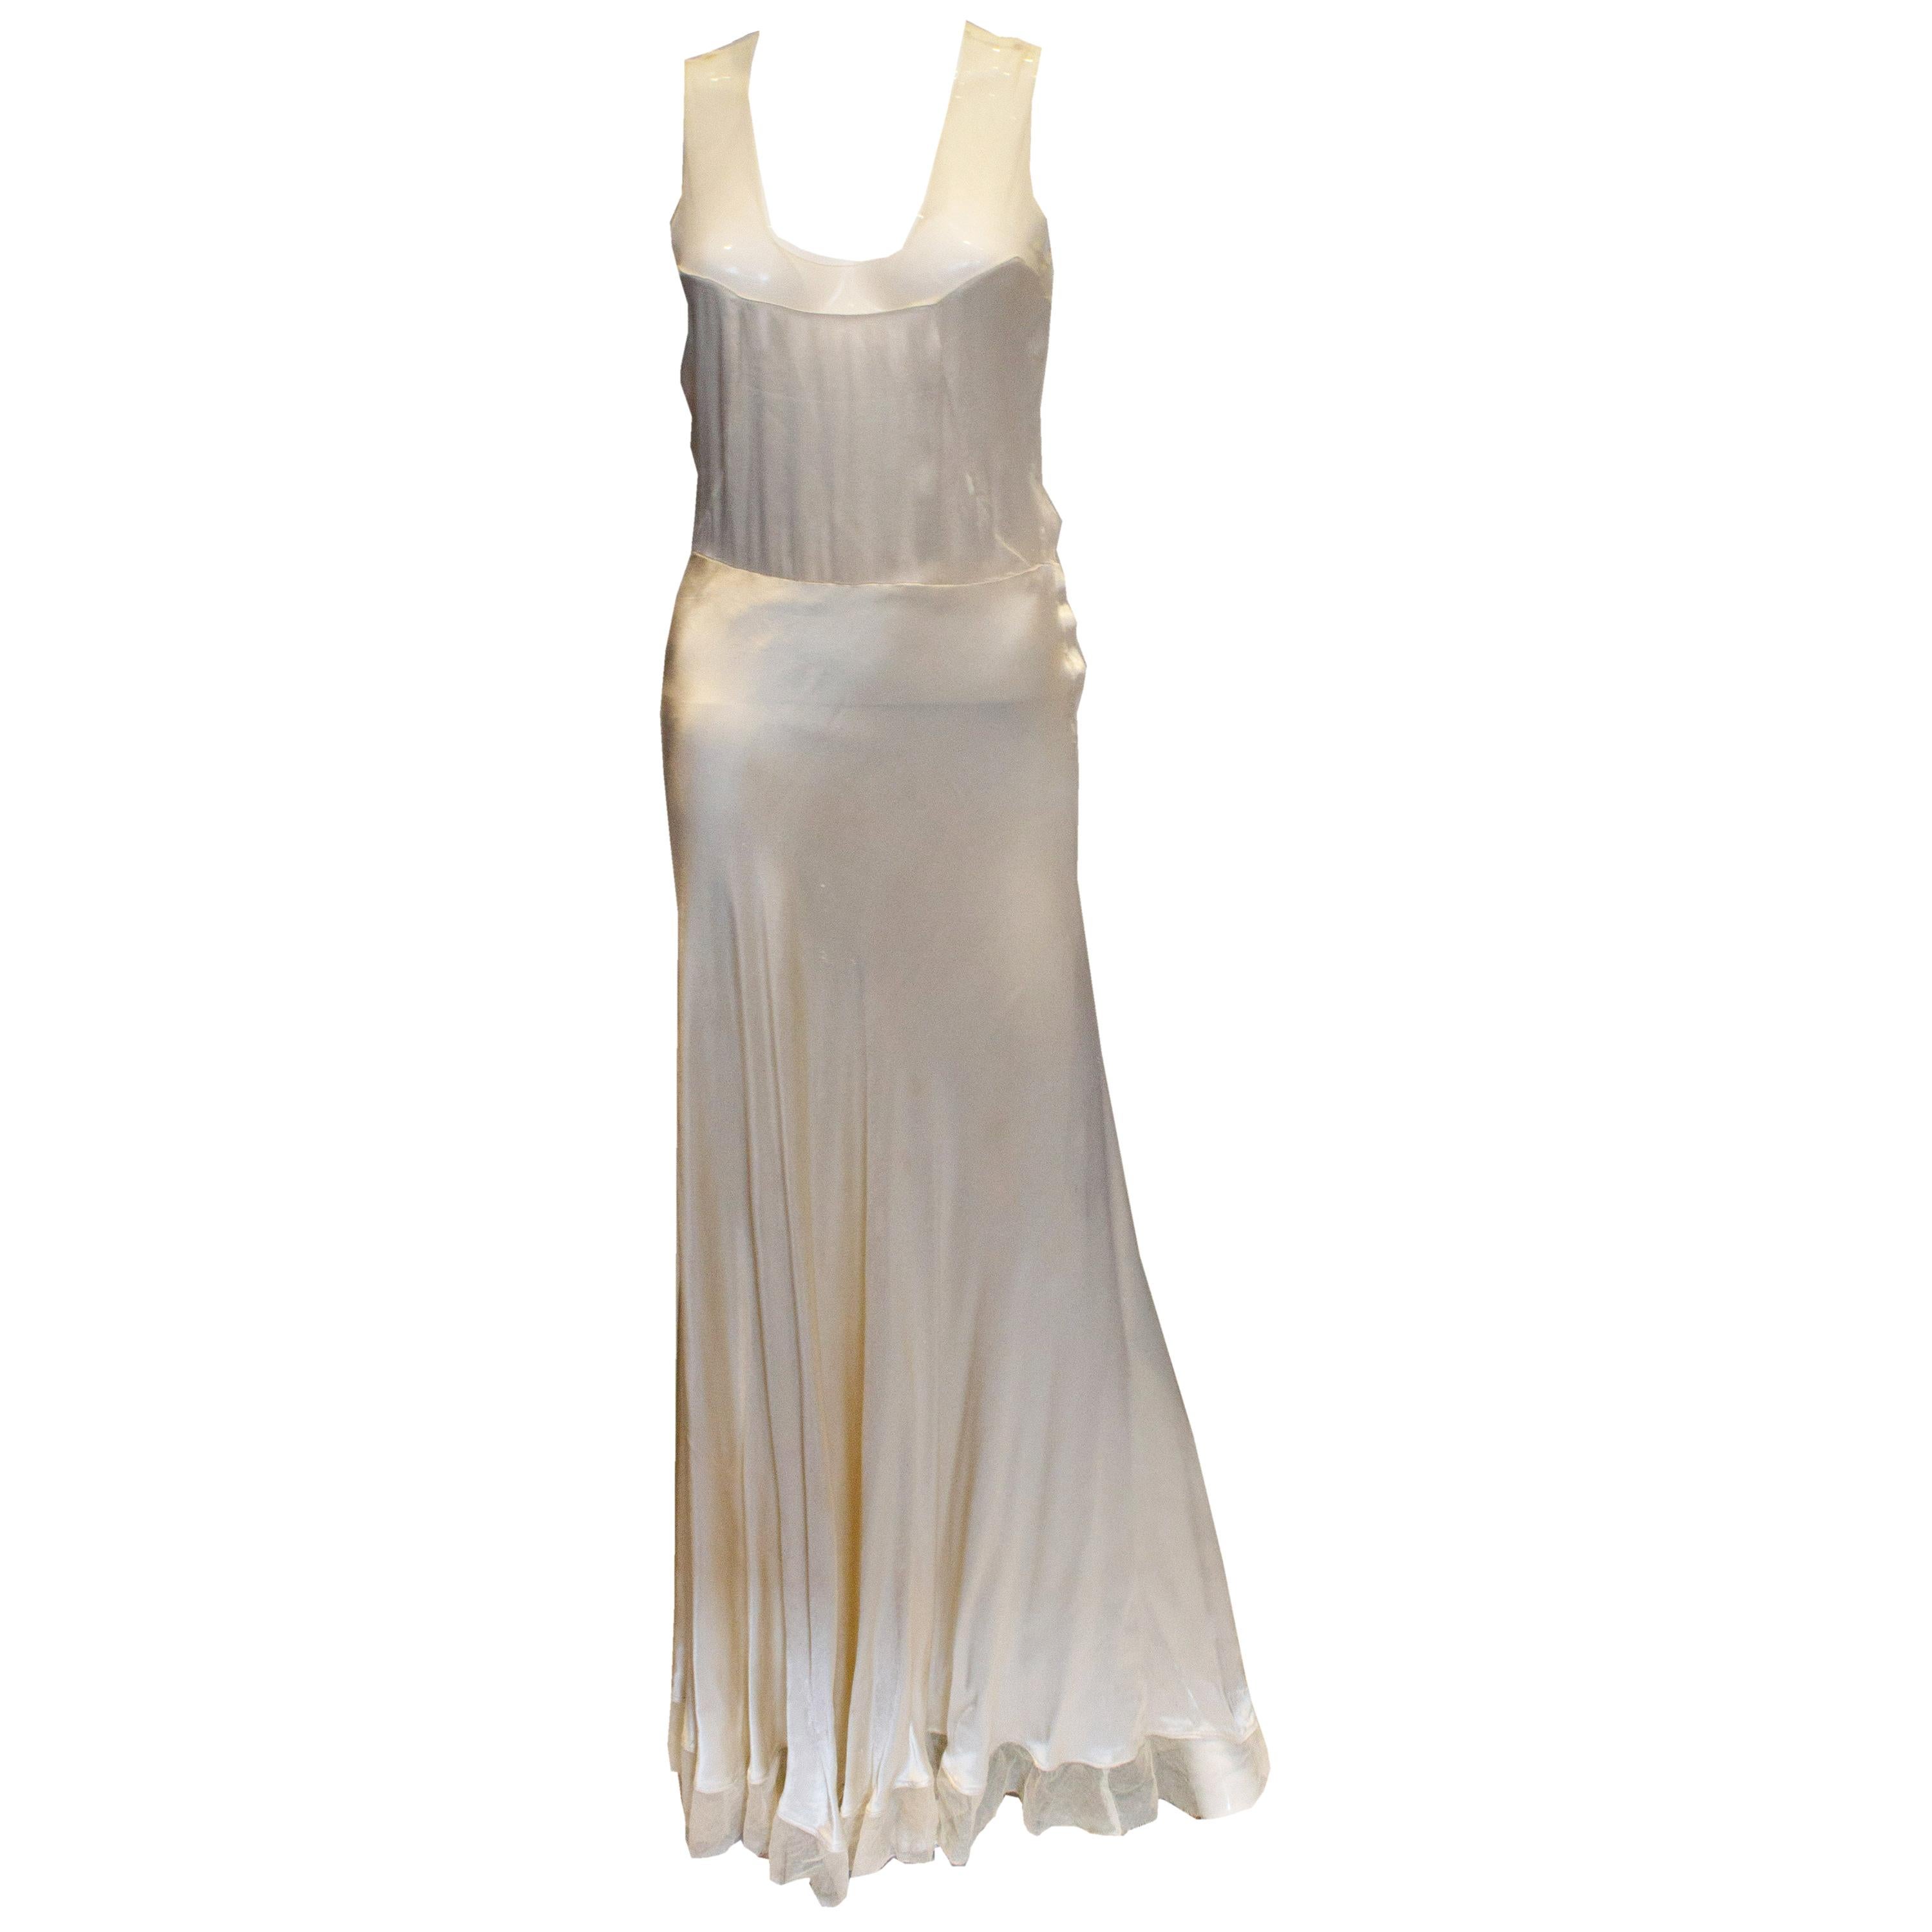 Vintage Ivory Net and Satin Slip Dress For Sale